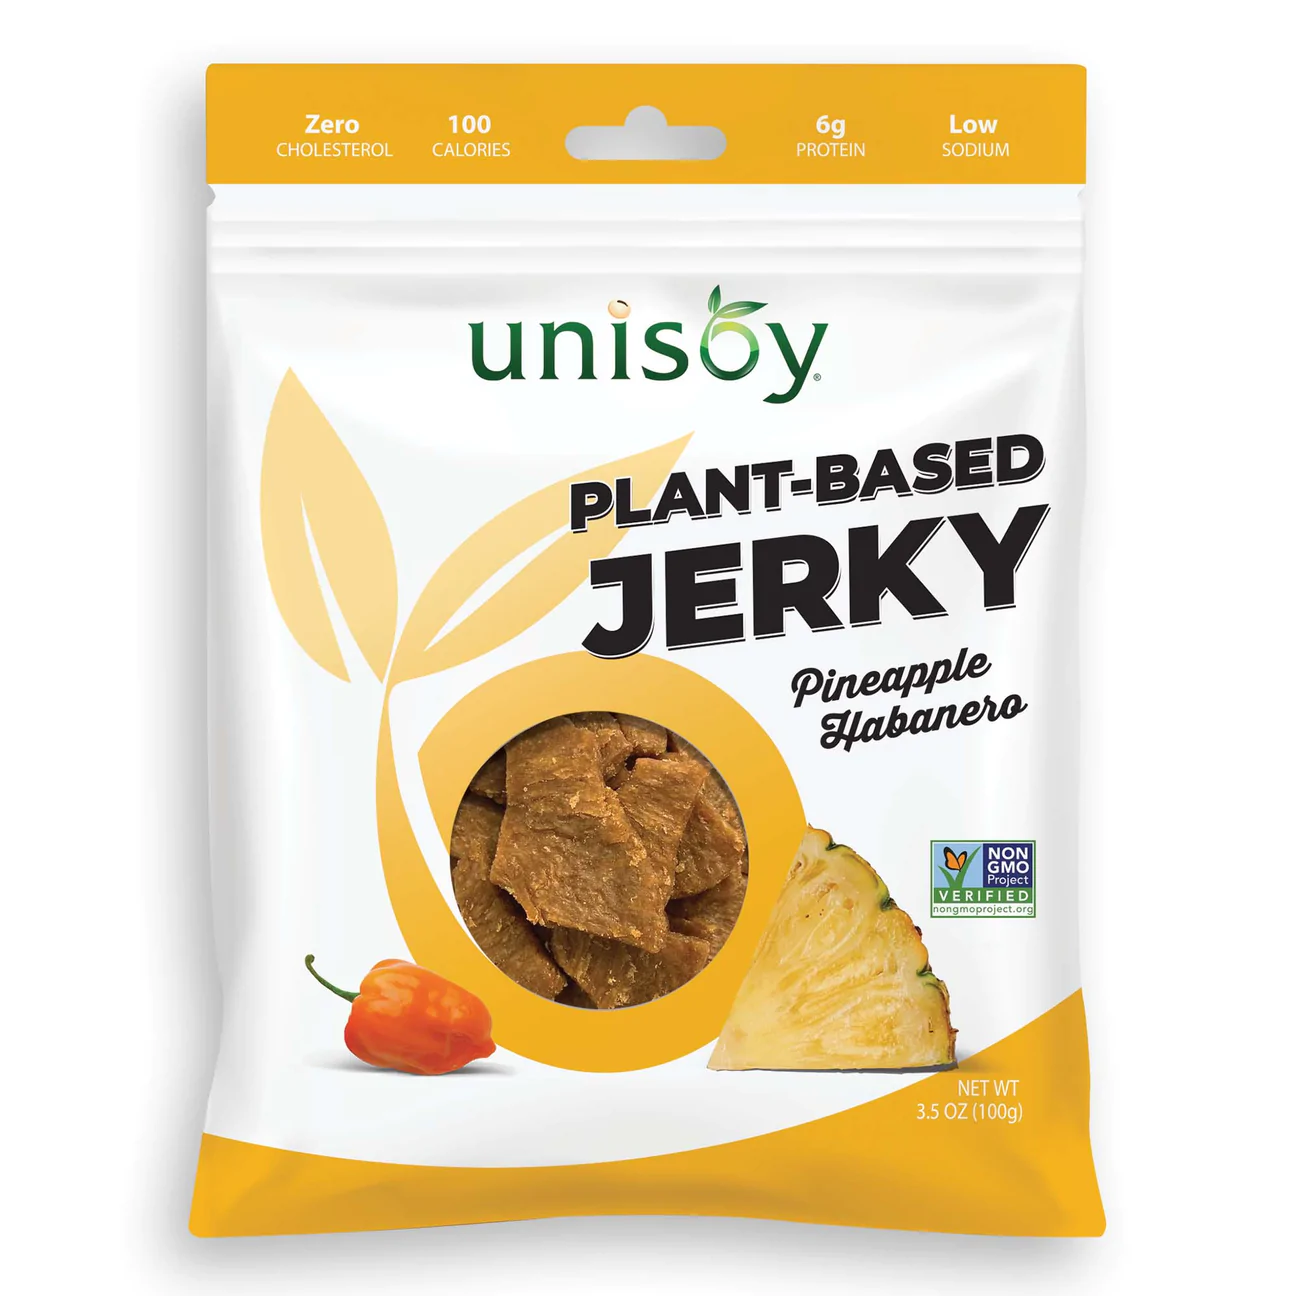 Unisoy Plant-based Jerky - Pineapple Habanero 2 innerpacks per case 3.5 oz